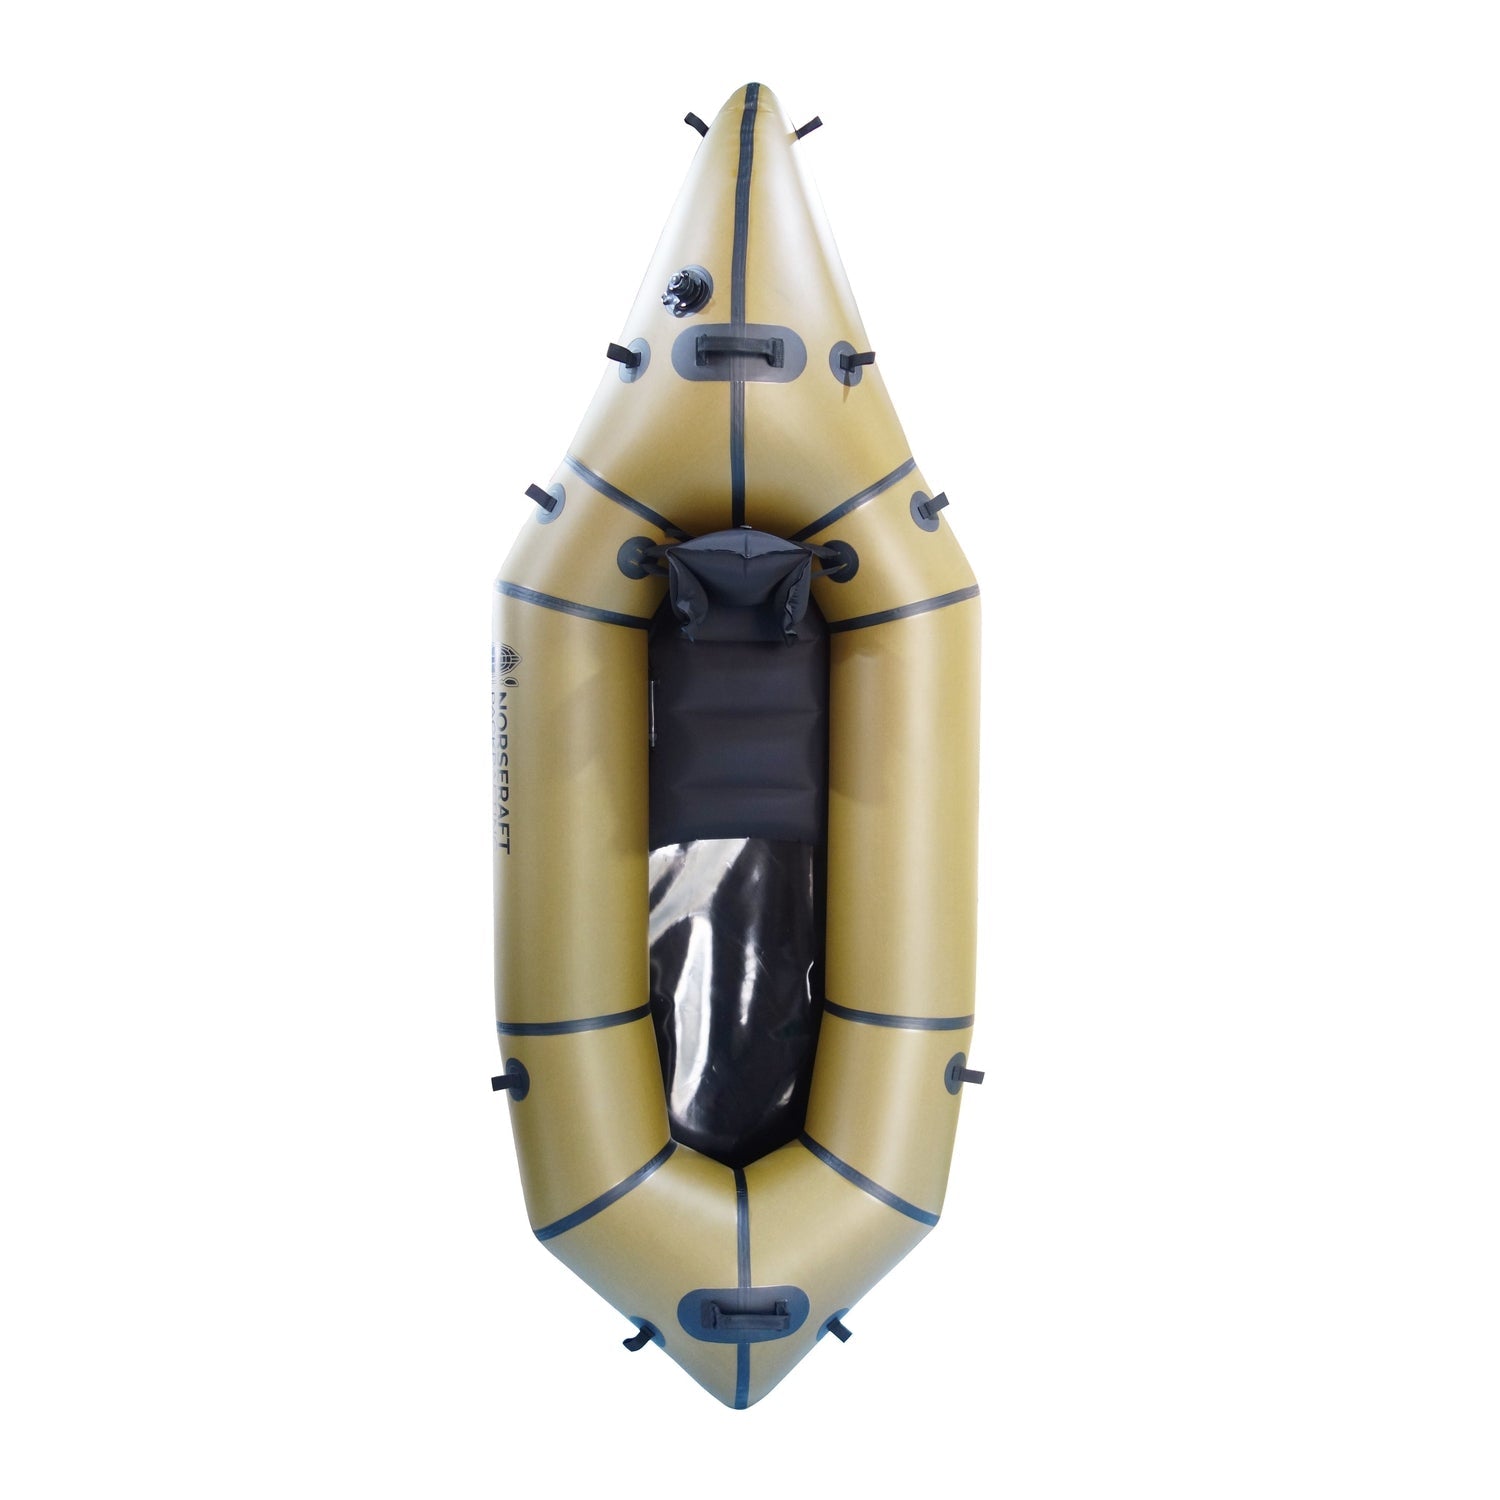 Buy Everearth Ultralight Tpu Fabric 1-person Packrafting, Canoe